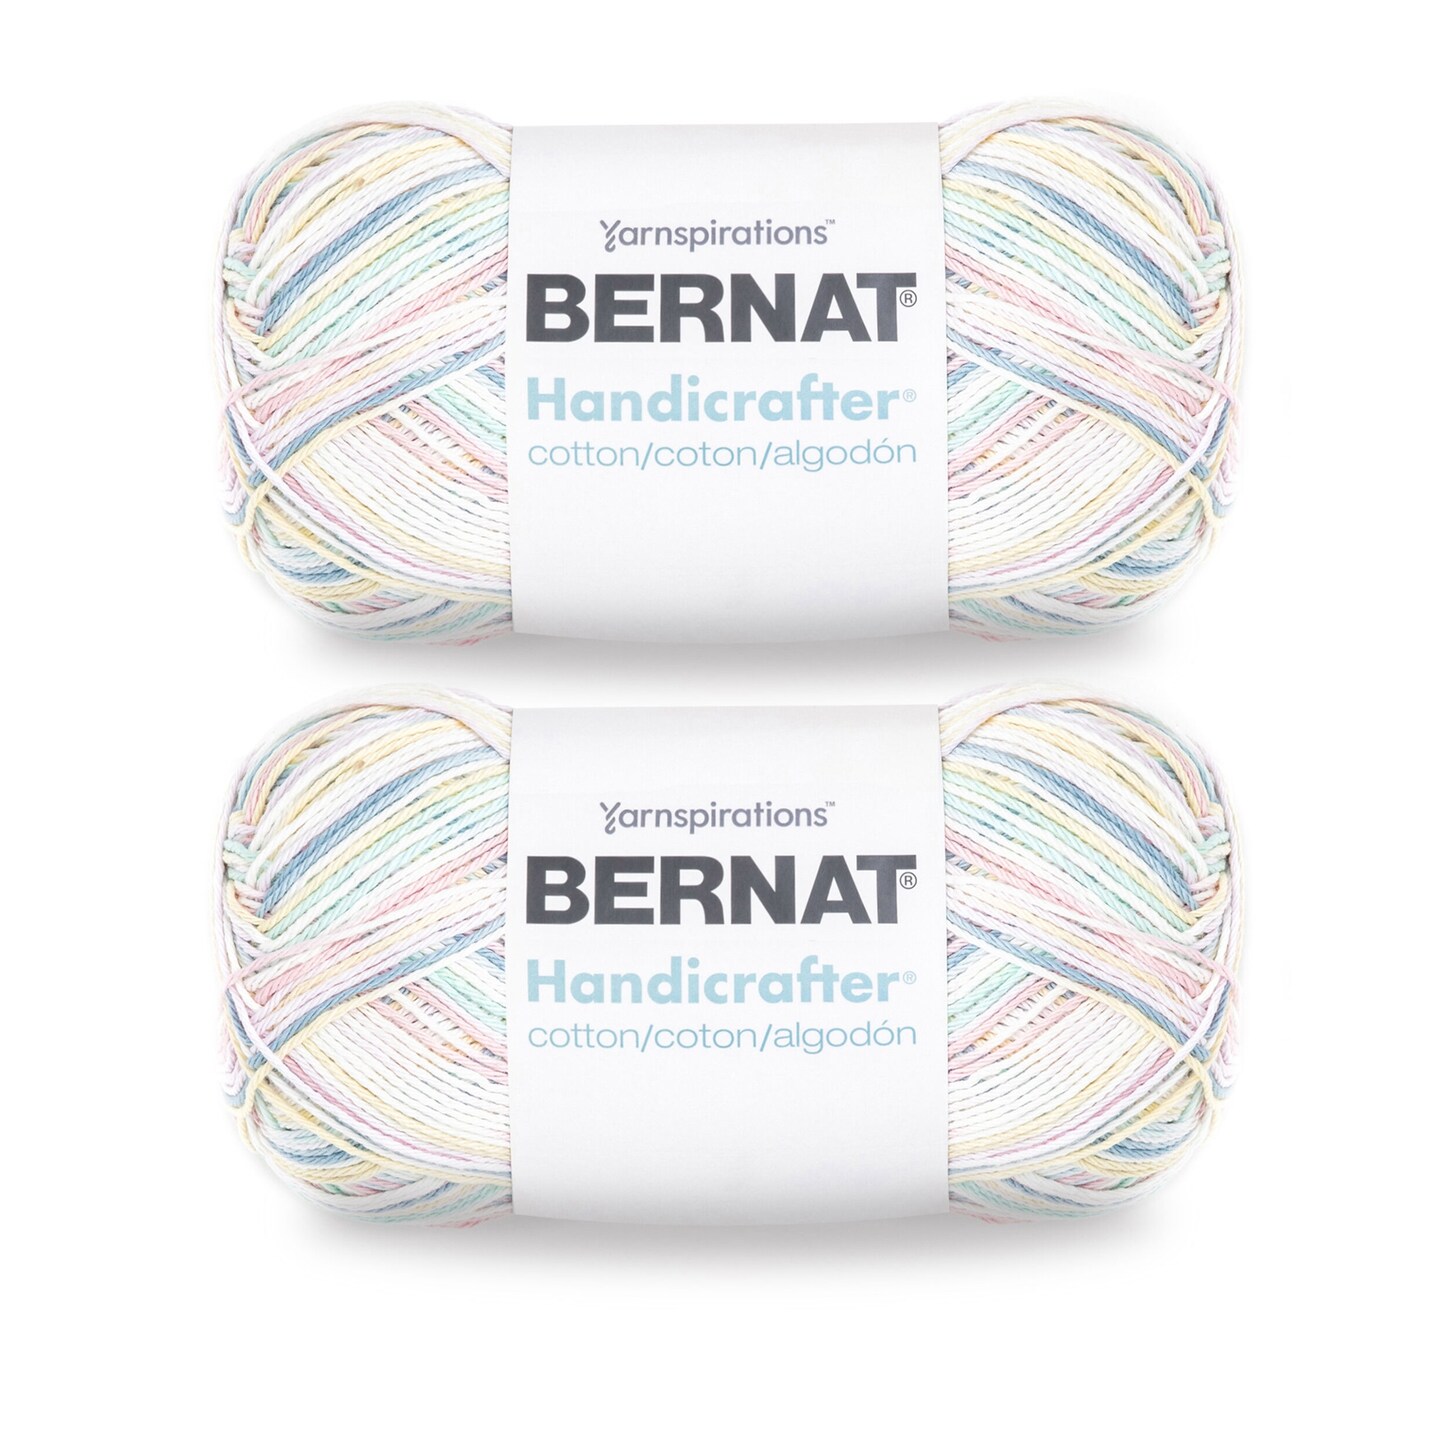 Bernat Handicrafter Cotton Big Ball Mod Ombre Yarn - 2 Pack of 340g/12oz - Cotton - 4 Medium (Worsted) - 608 Yards - Knitting, Crocheting & Crafts